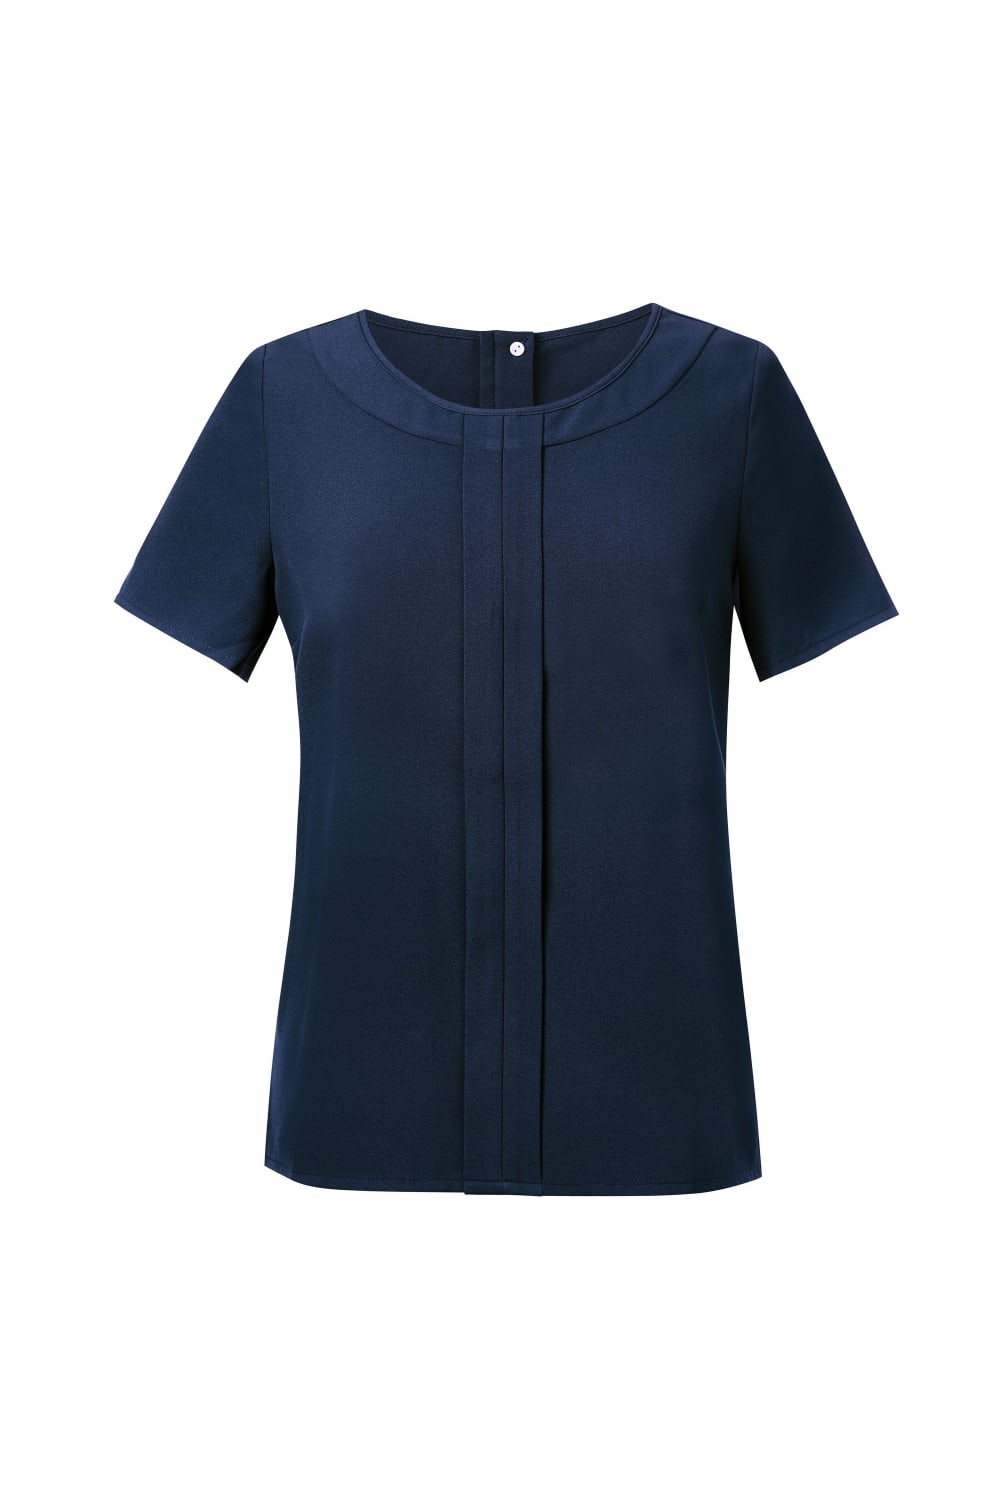 Brook Taverner Womens/Ladies Verona Crepe De Chine Short Sleeved Blouse (Navy)